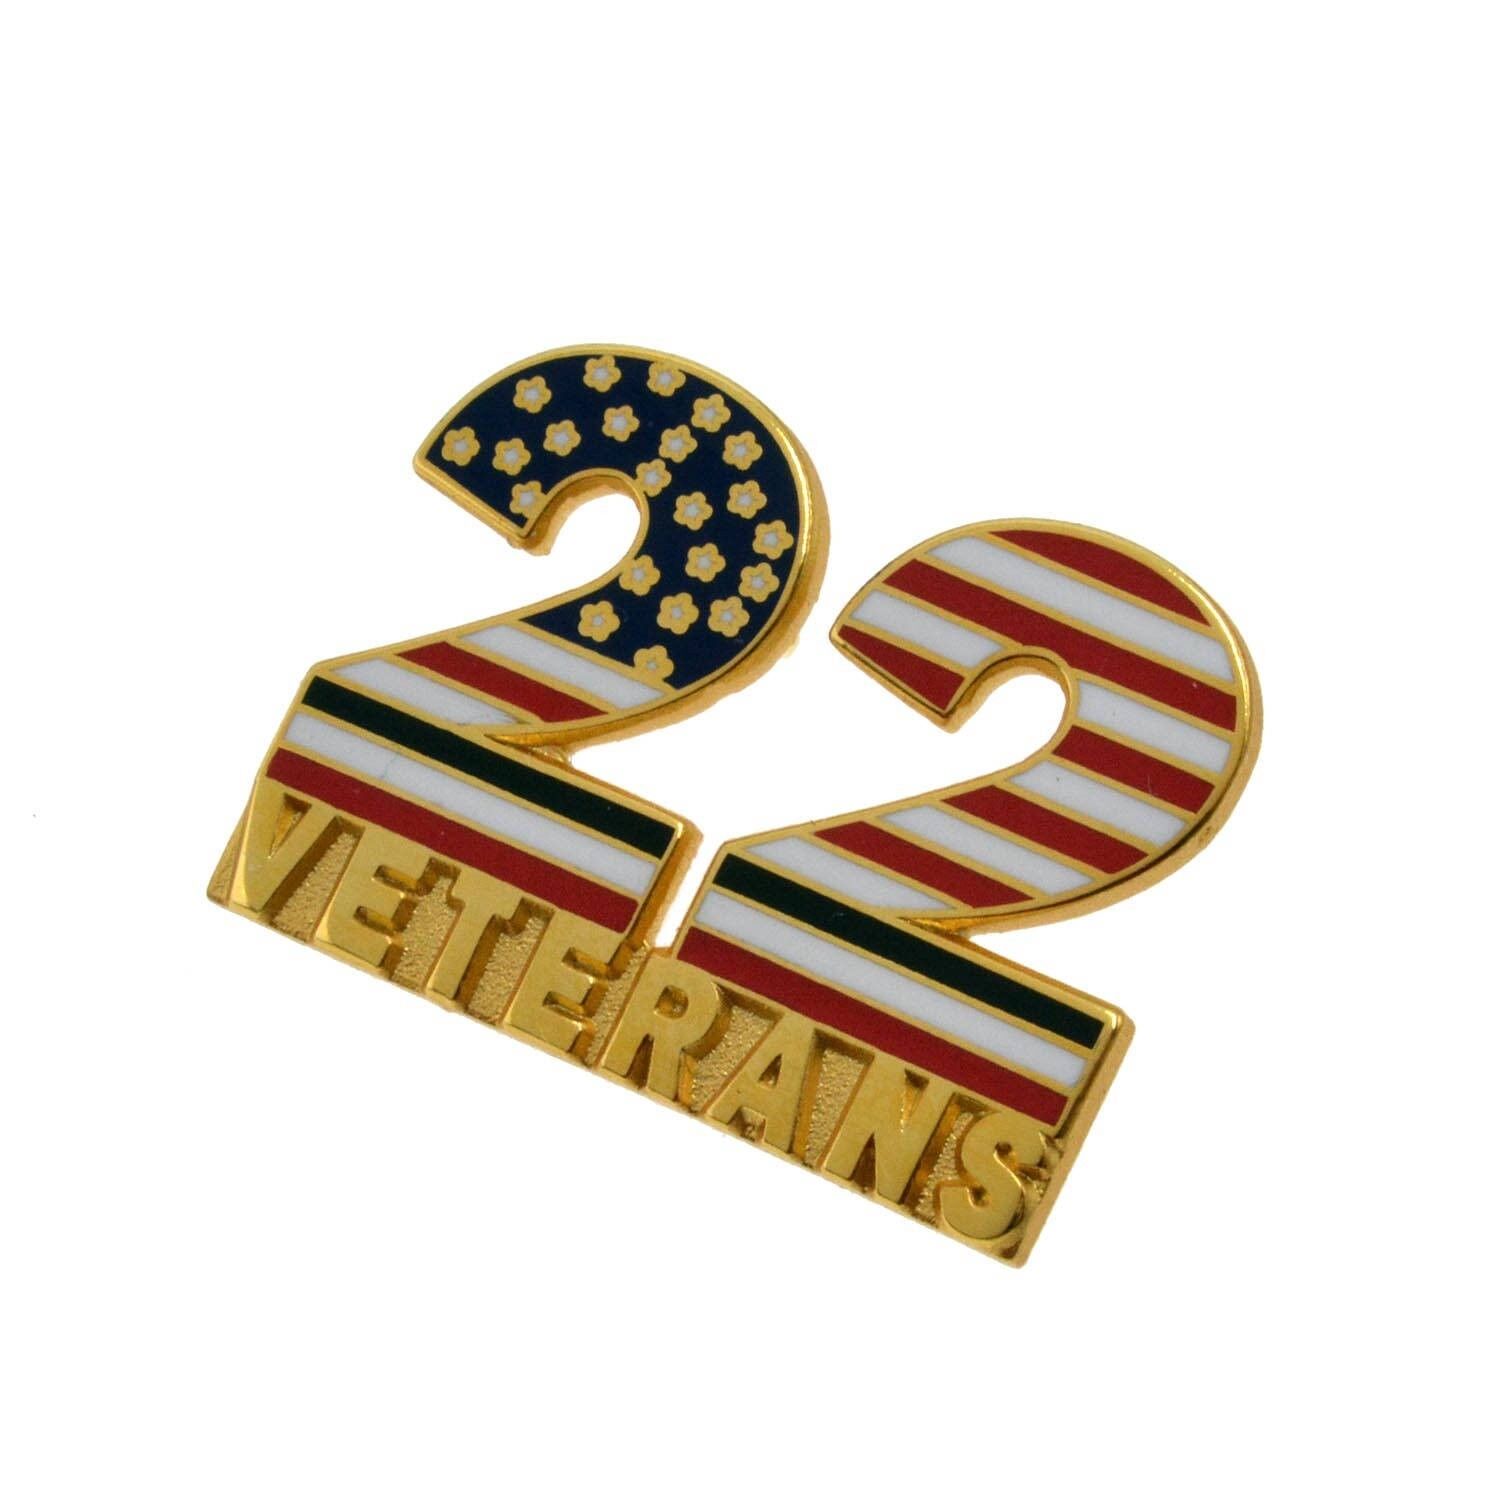 Veteran Lapel Pin 22 Suicide Prevention Awareness Memorial USA Military Flag